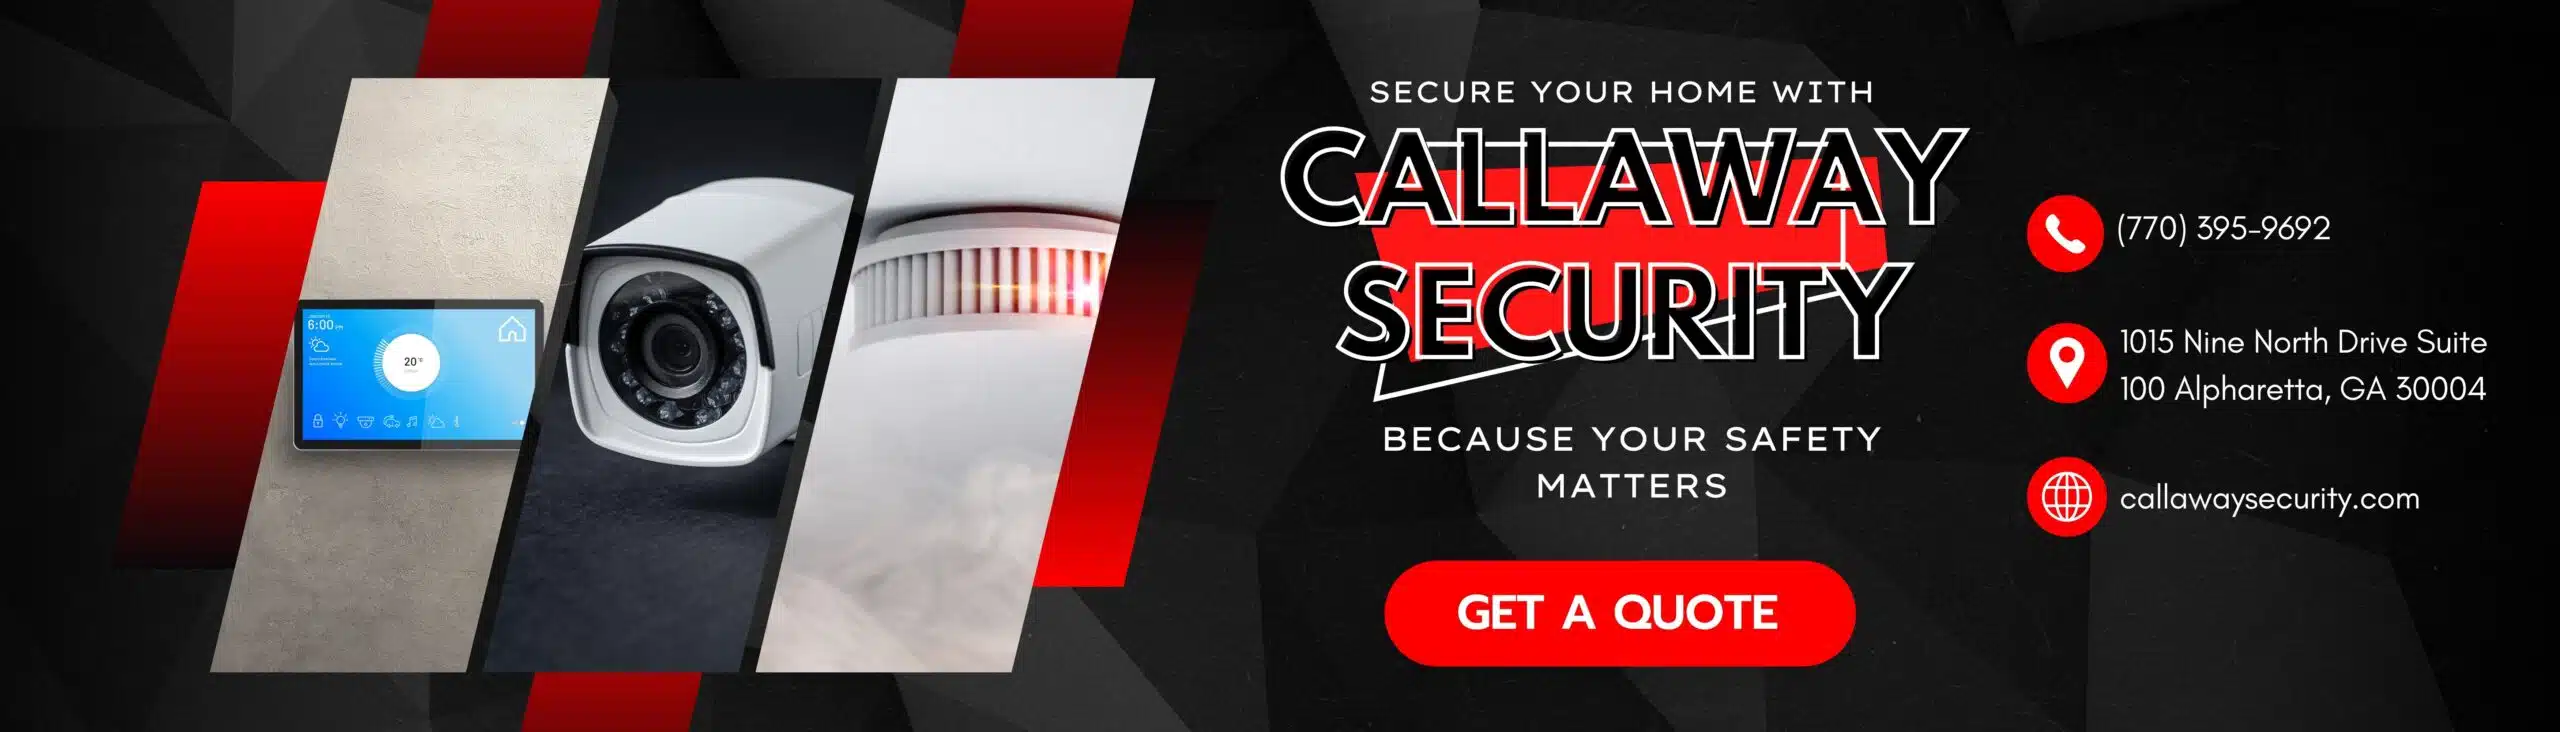 Callaway Security AD